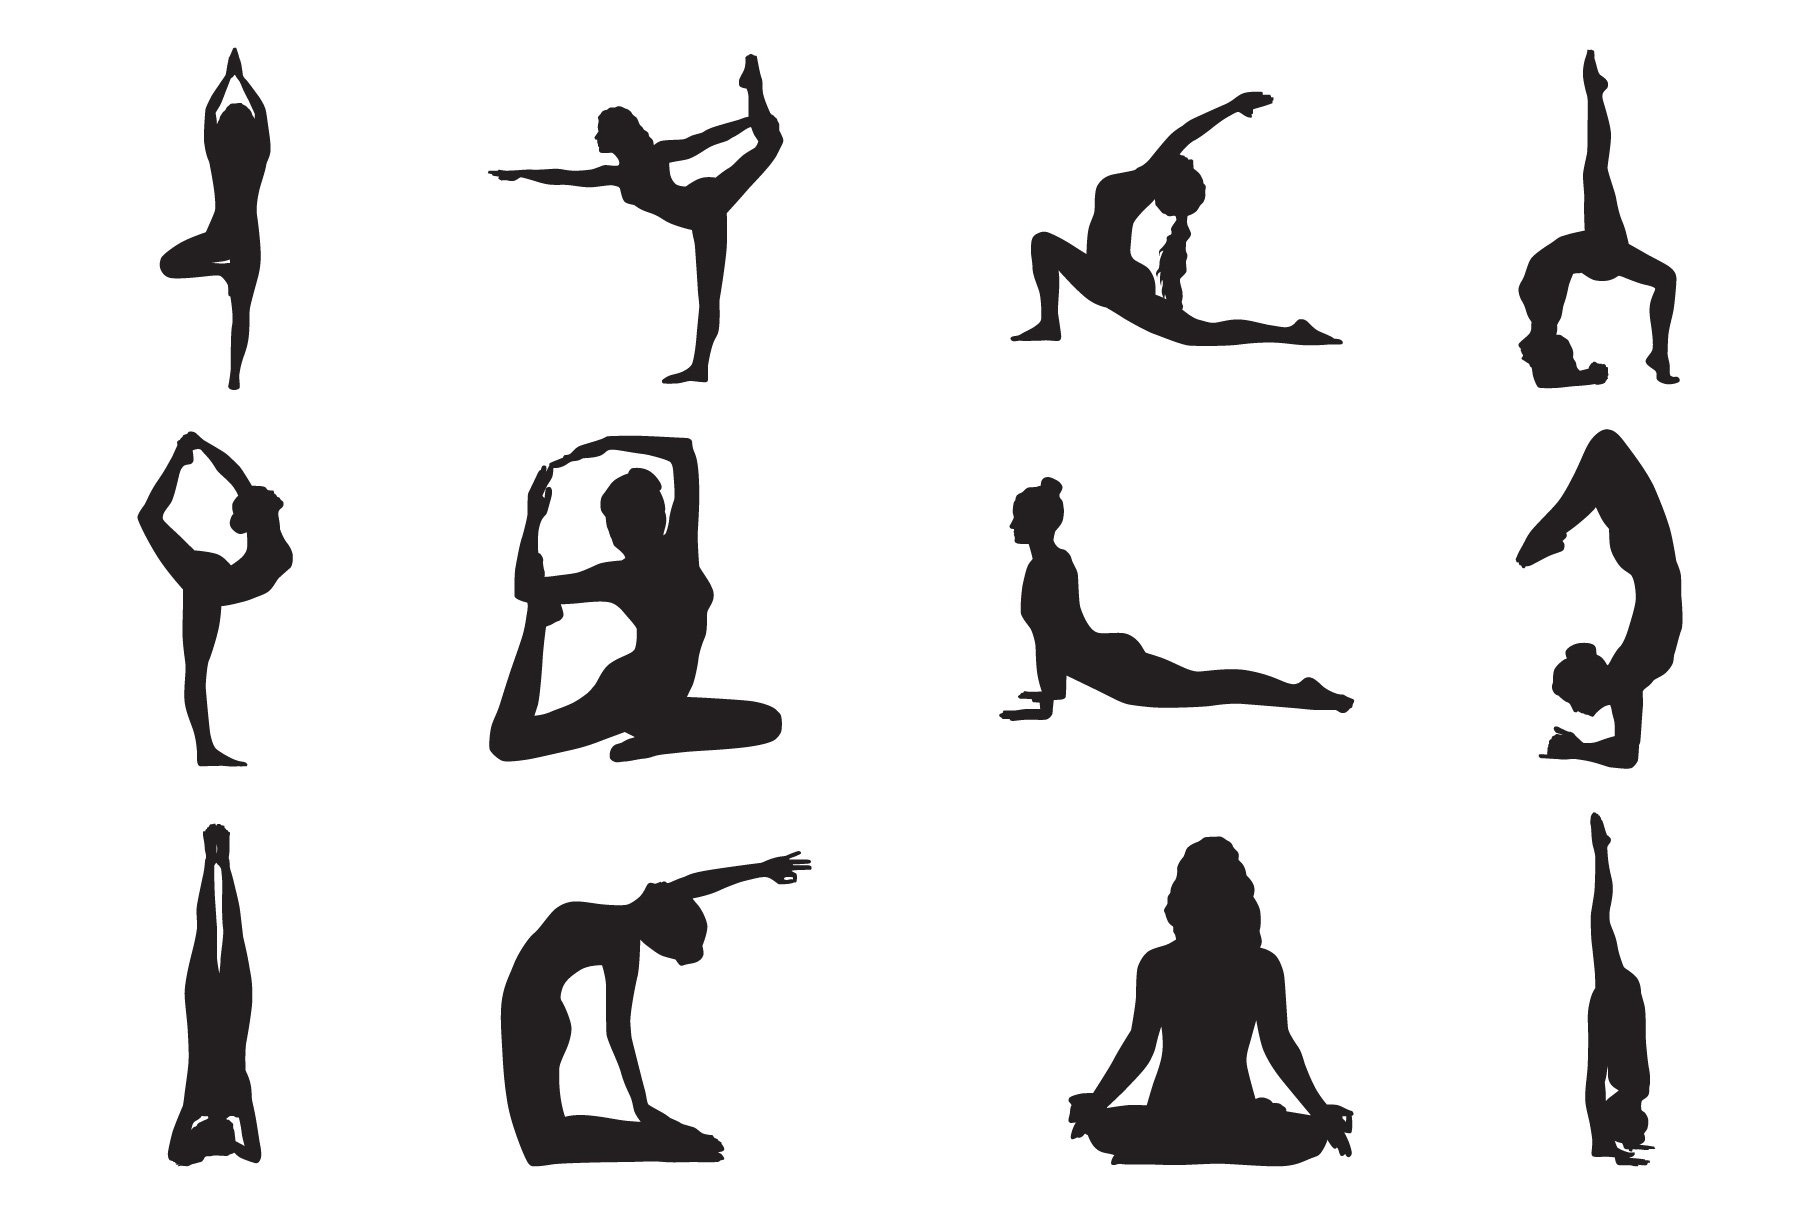 Alphabet yoga poses for kids|abc exercises - YouTube